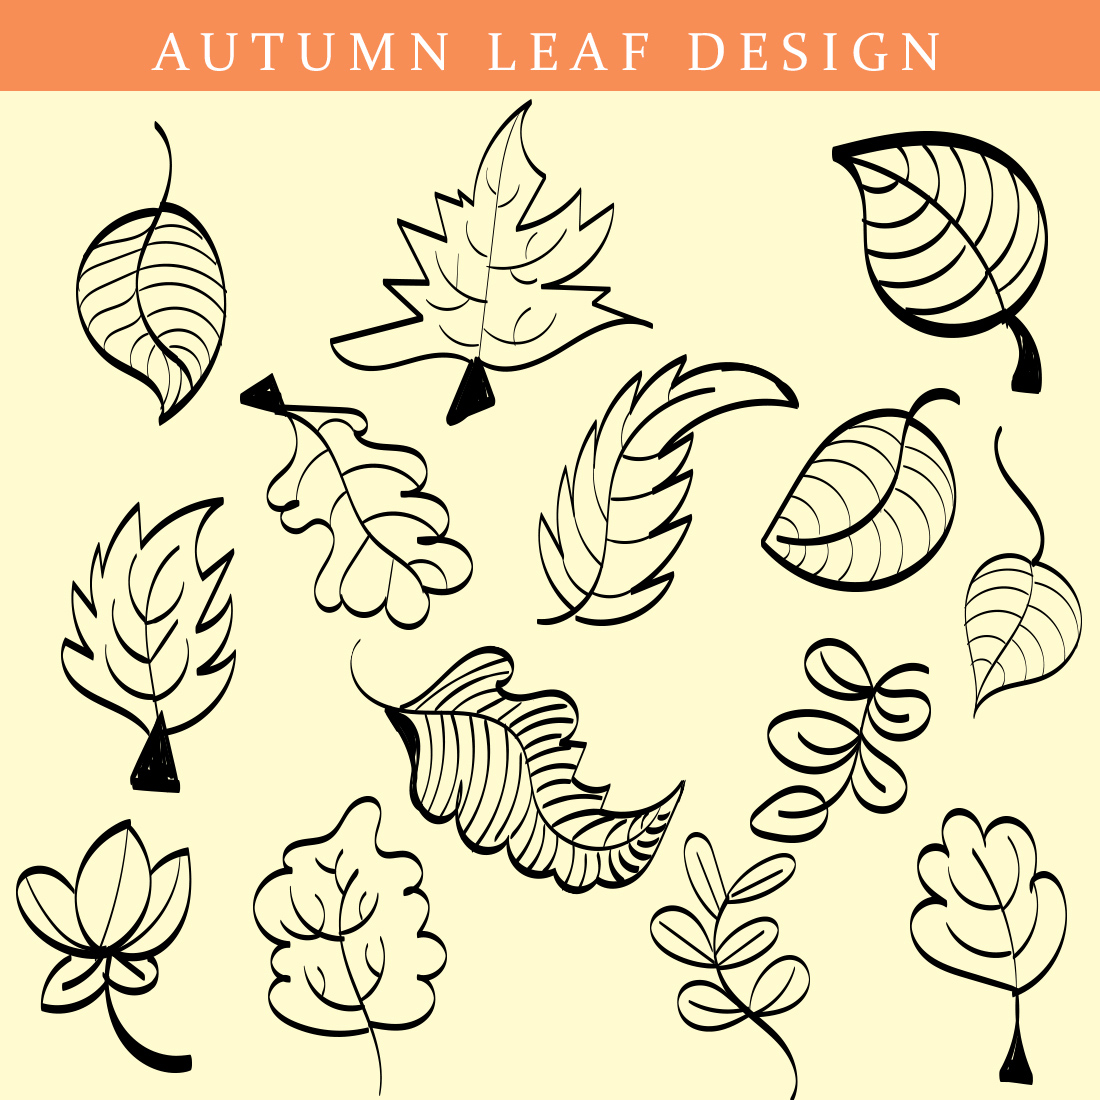 14 Autumn Leaves Design main cover.